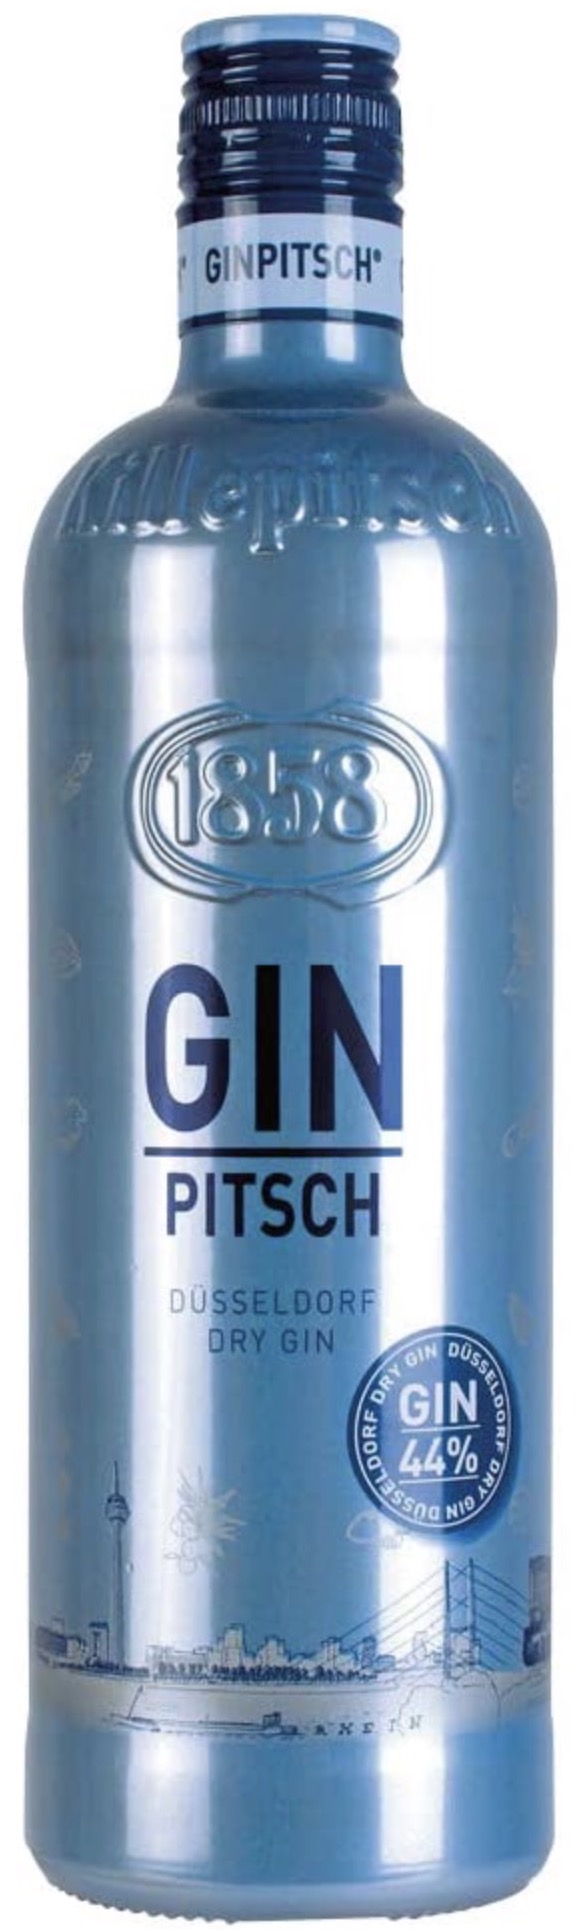 Gin Pitsch German Dry Gin 44% vol. 0,7L